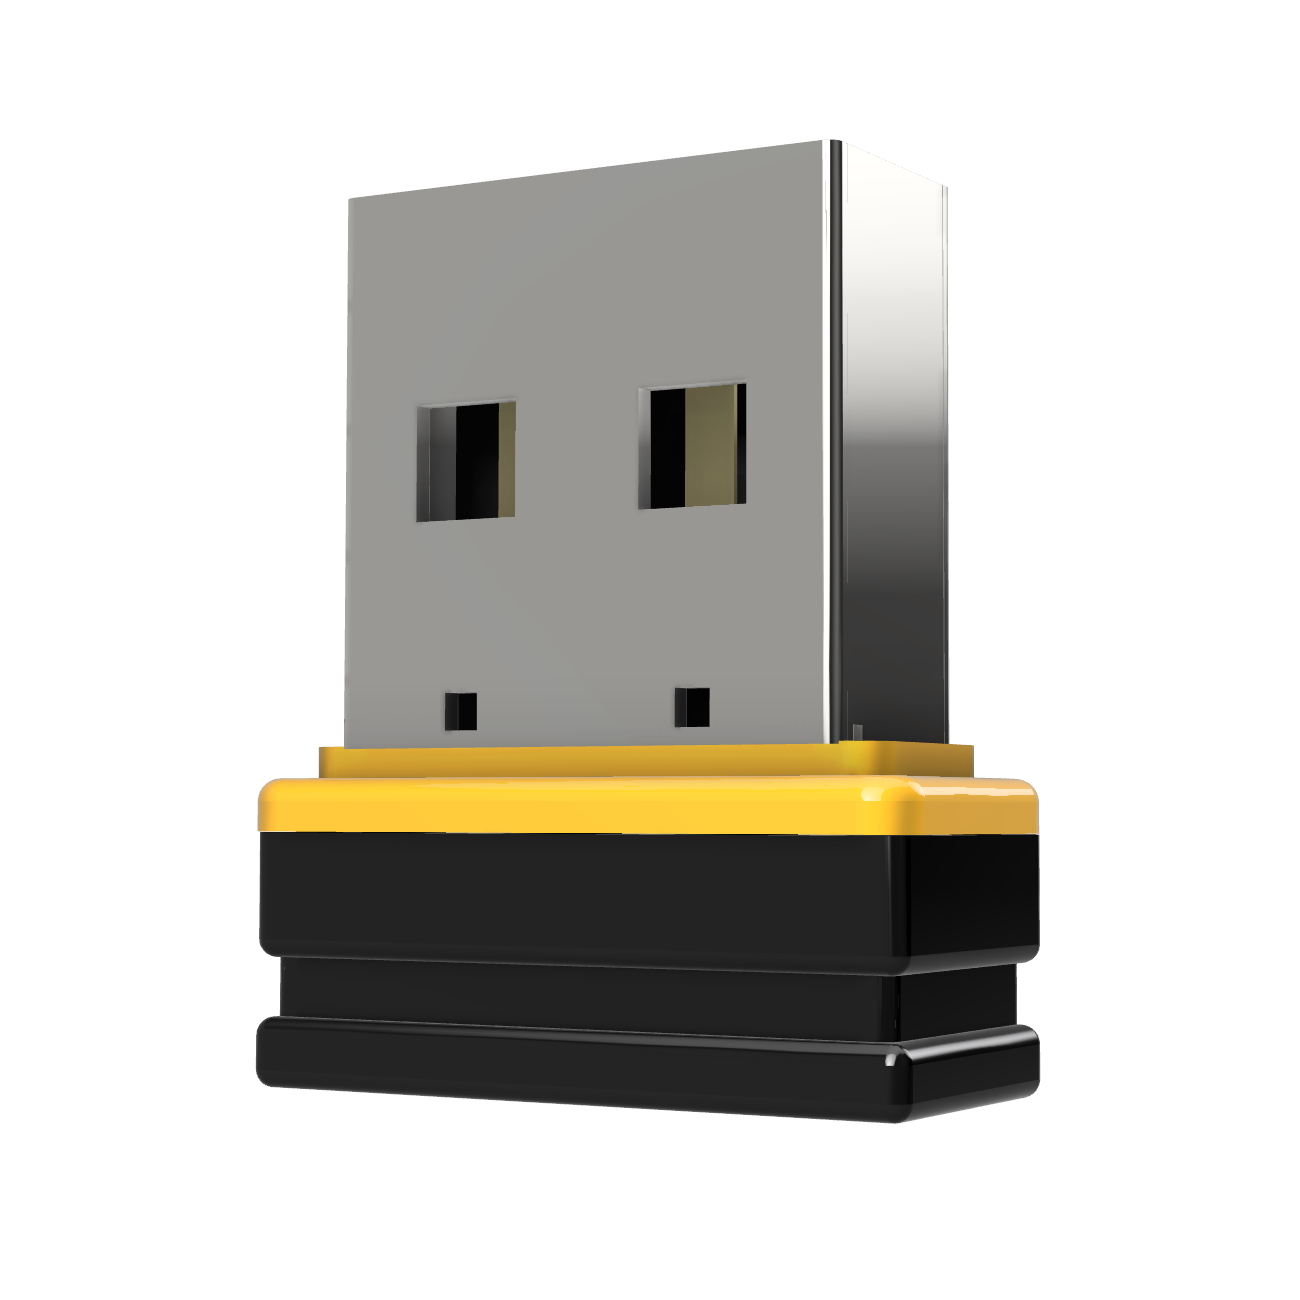 (Schwarz/Gelb, P1 Mini USB GERMANY ®ULTRA GB) 8 USB-Stick